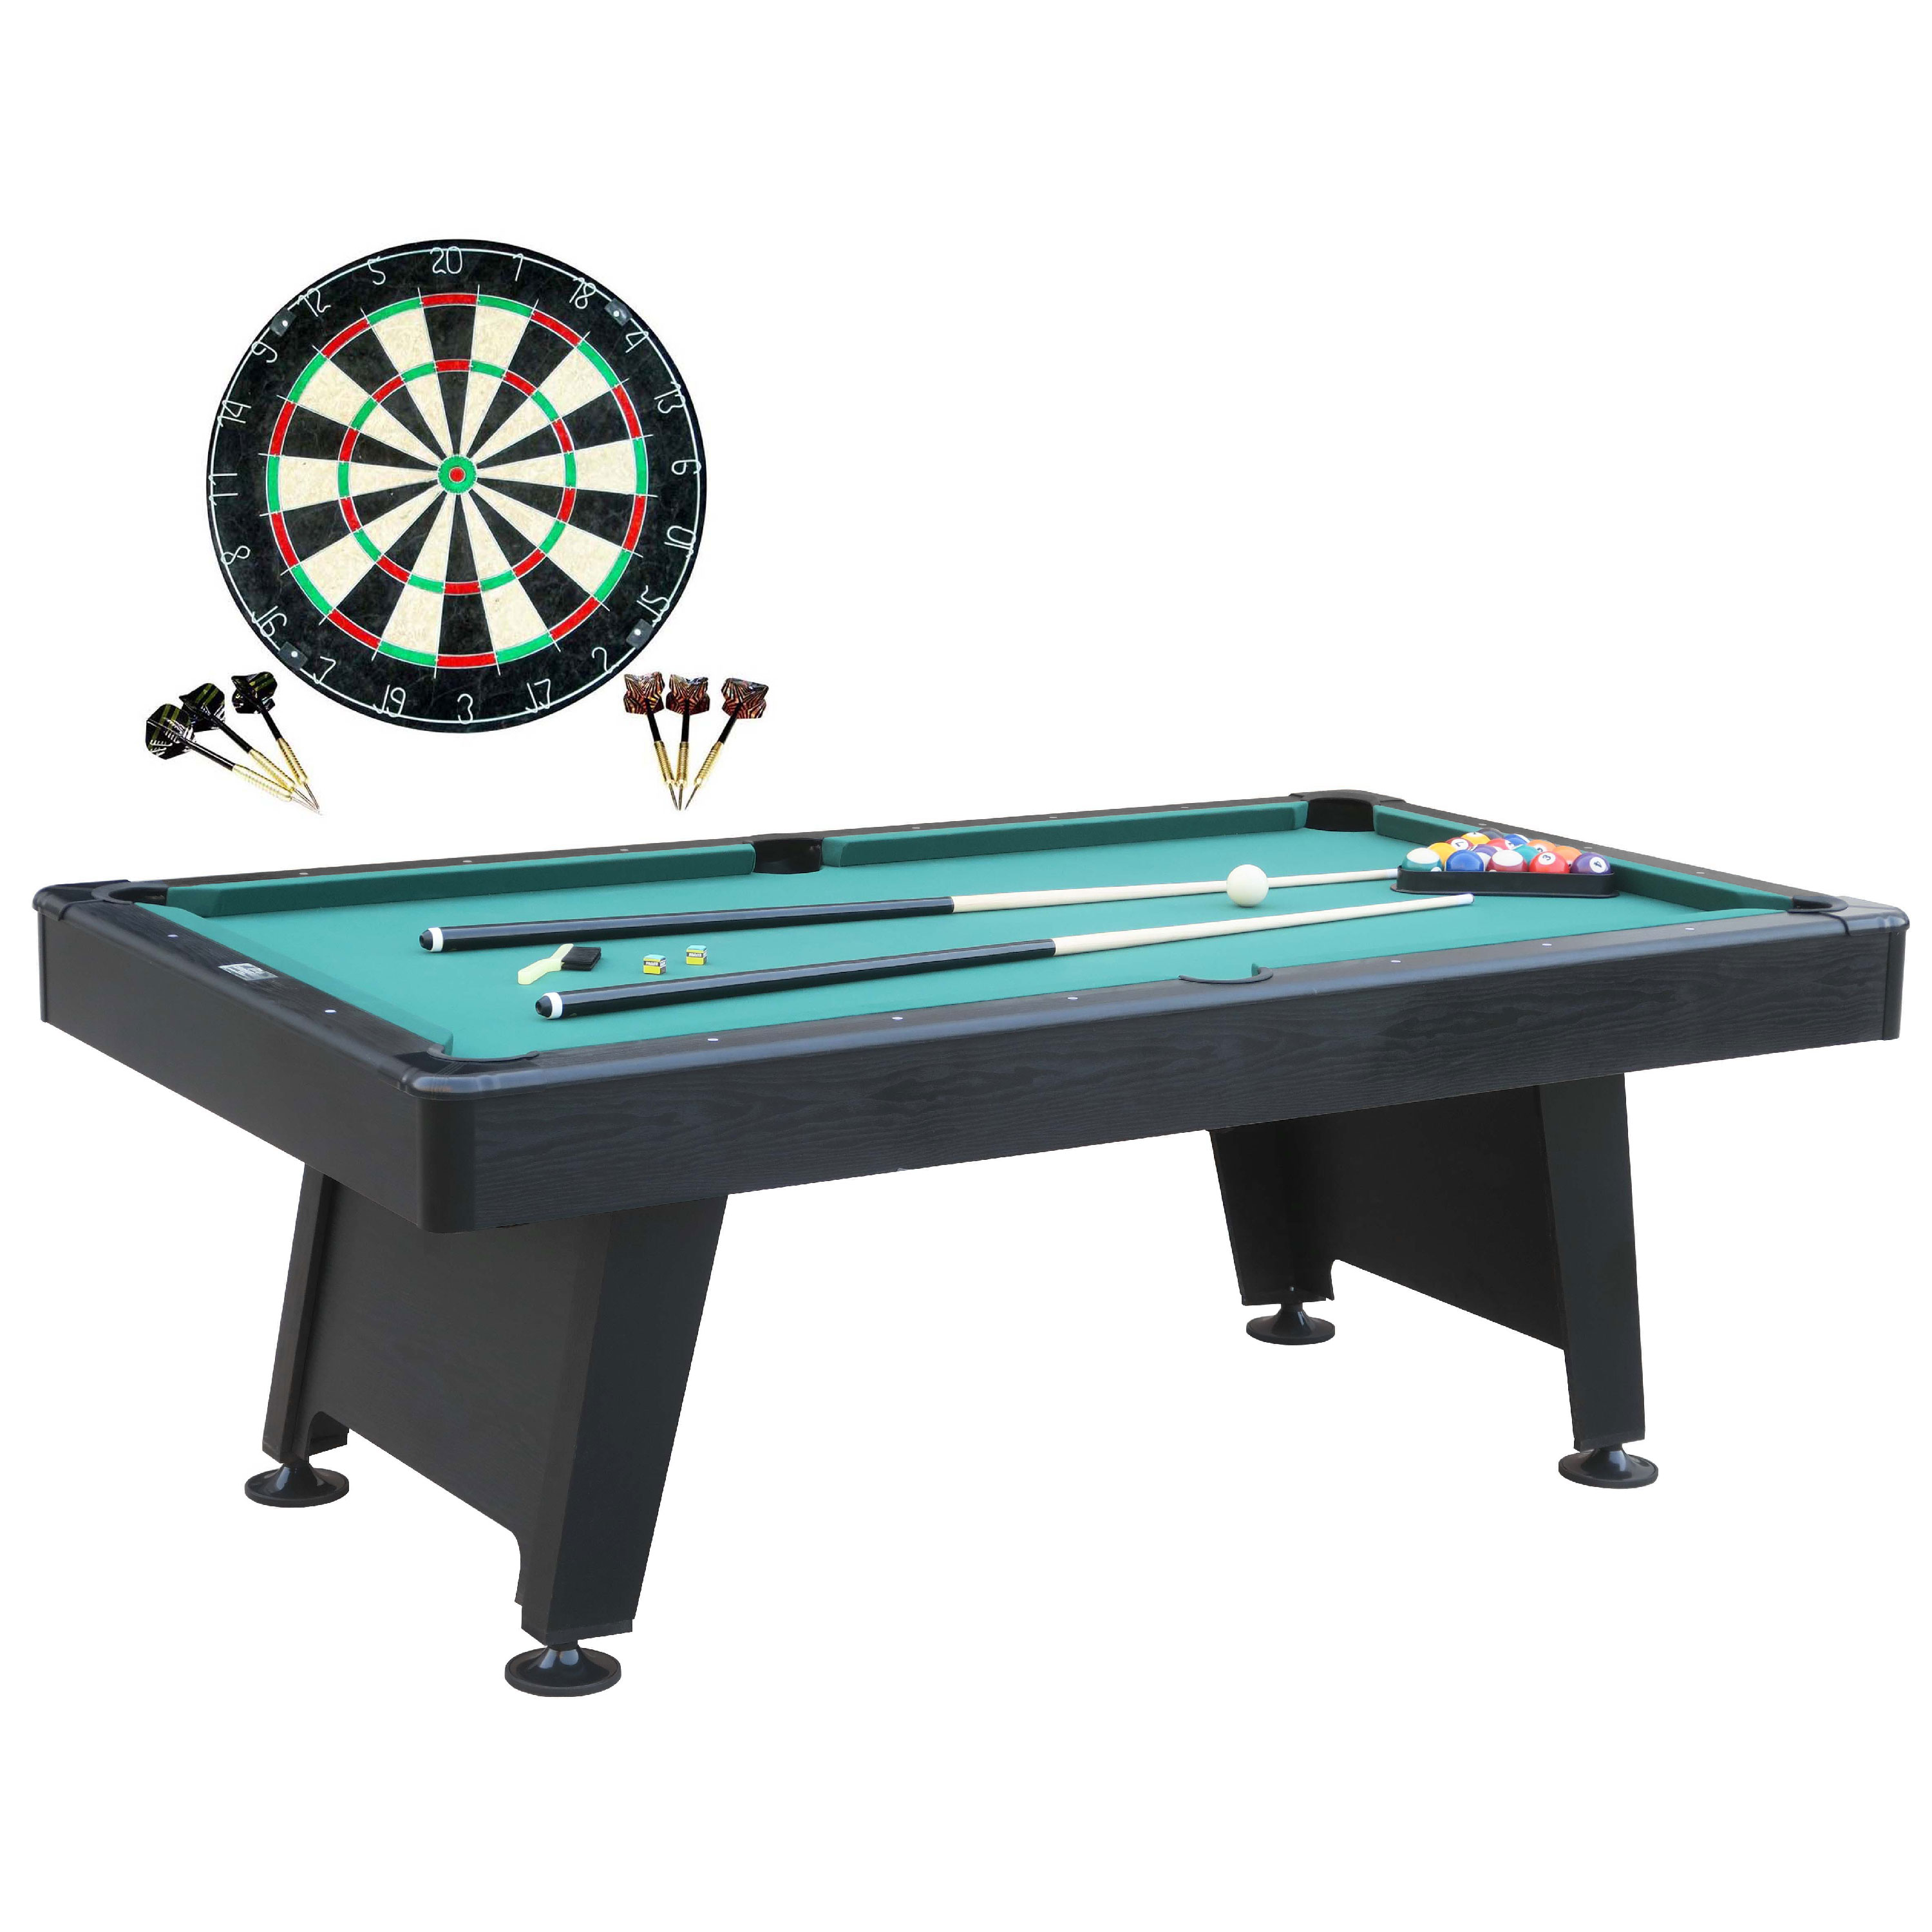 Barrington Billiard 84" Arcade Pool Table with Bonus Dartboard Set, Green, New - image 1 of 12